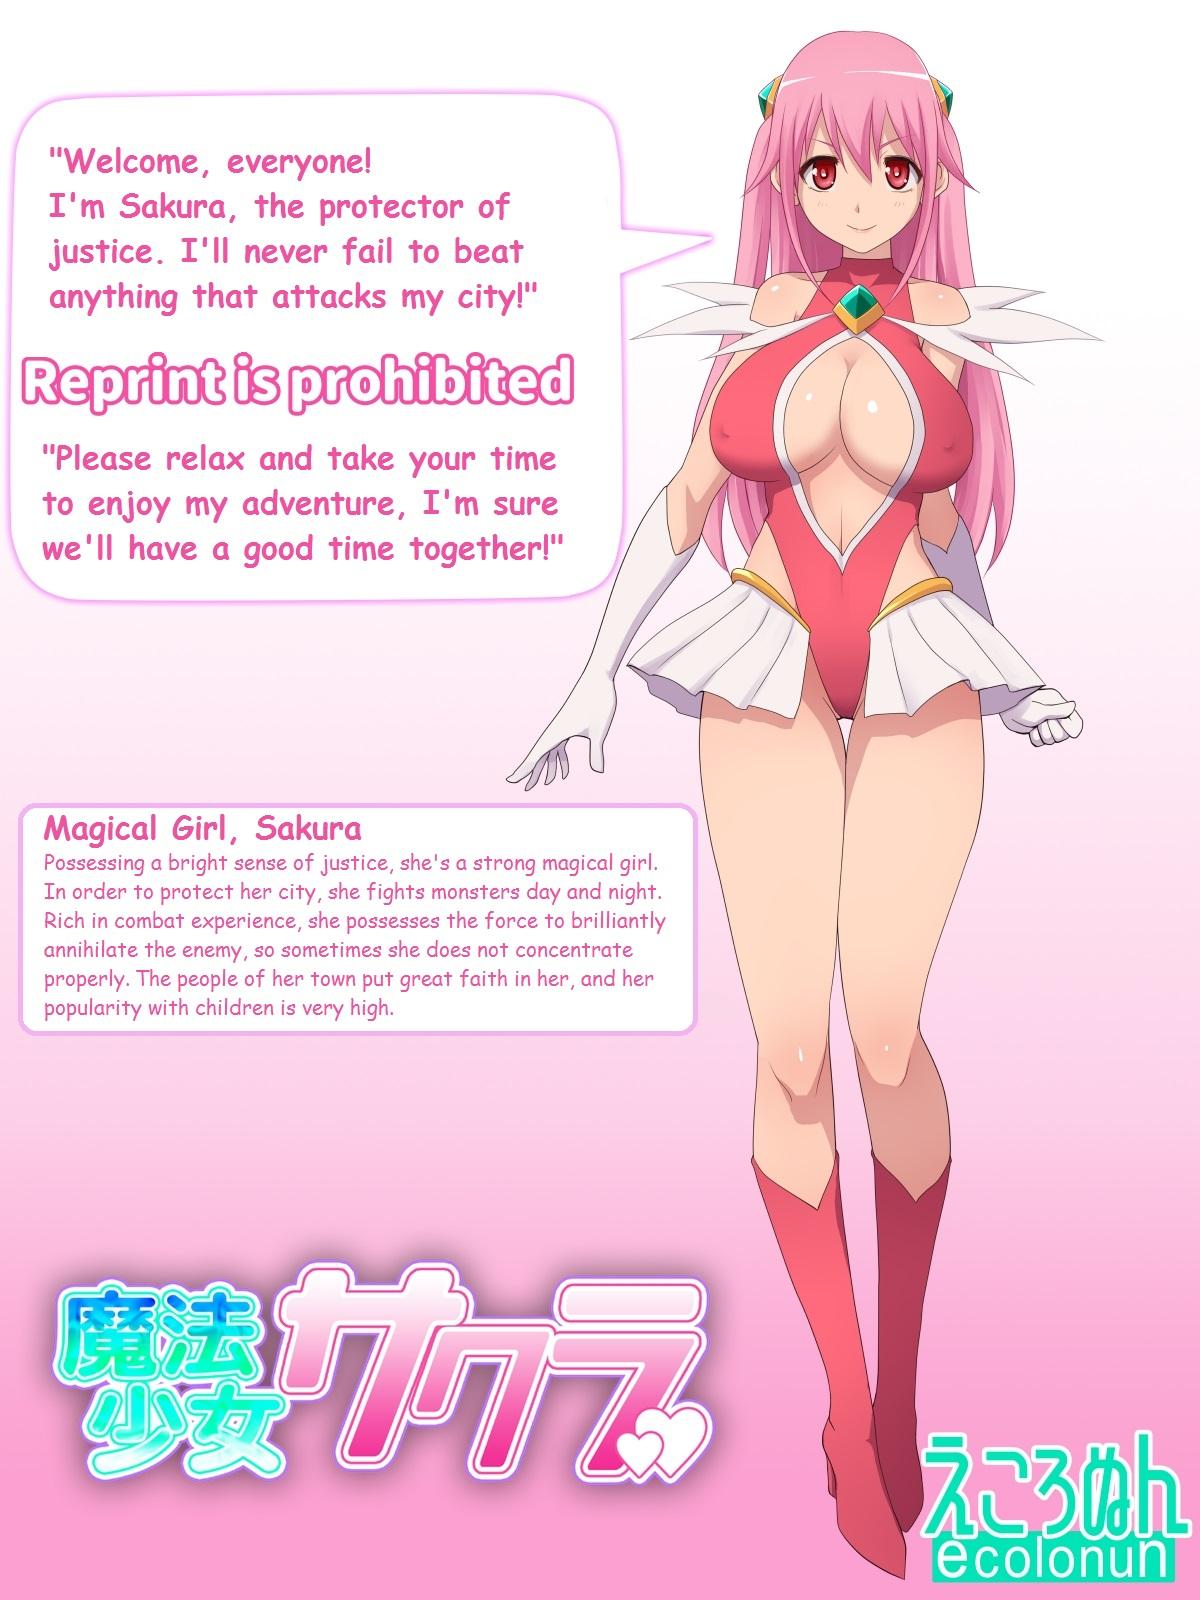 Free Blowjob Magical Girl Sakura - Original Delicia - Picture 2